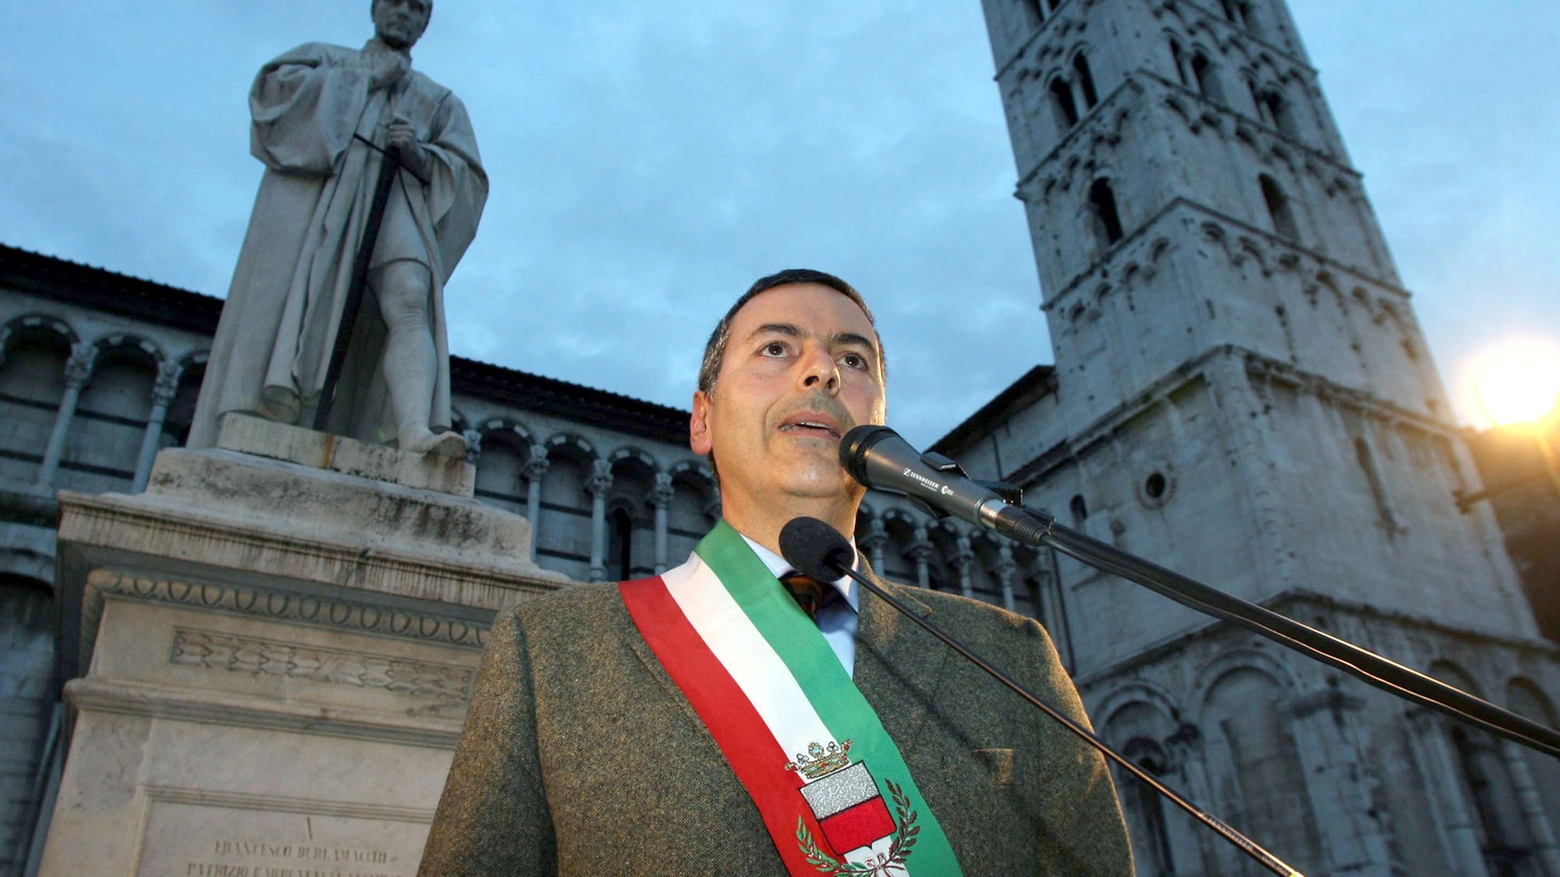 L'ex sindaco di Lucca Pietro Fazzi